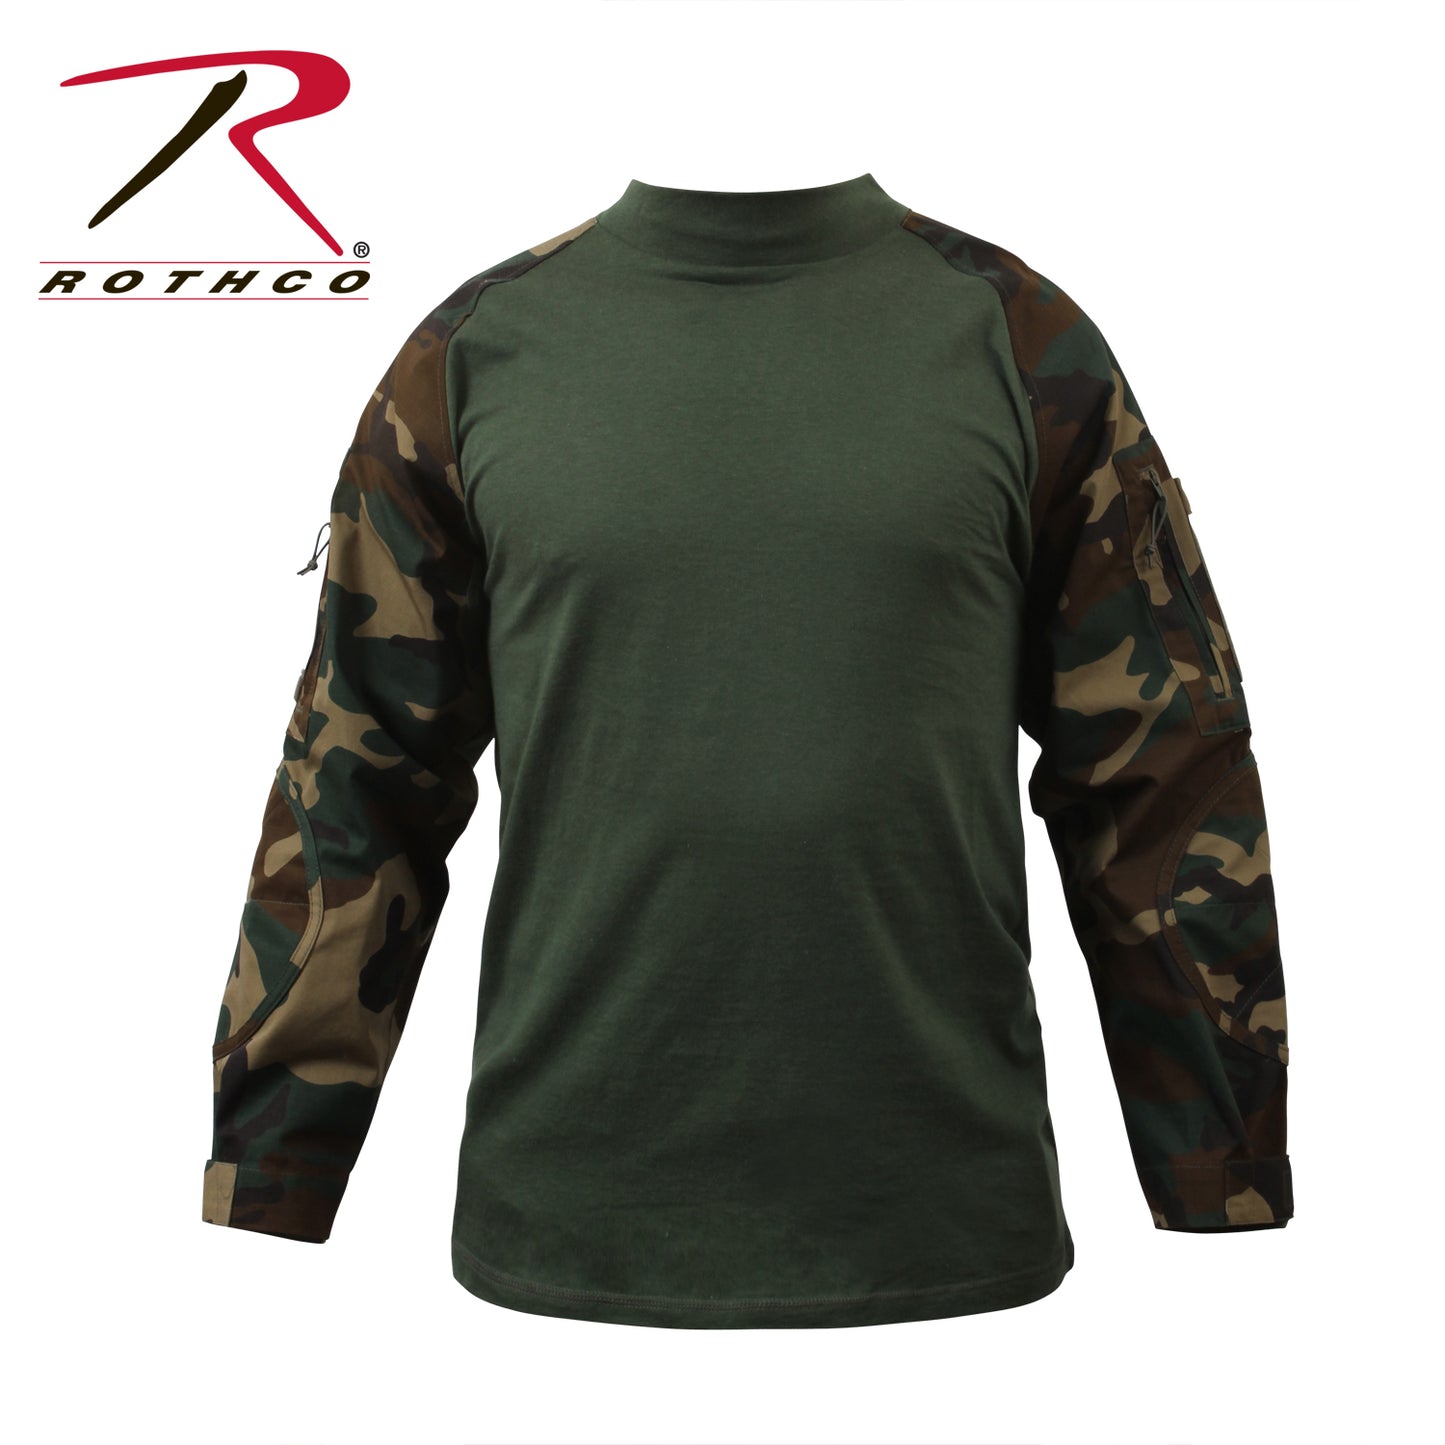 Milspec Military NYCO FR Fire Retardant Combat Shirt Big & Tall Shirts MilTac Tactical Military Outdoor Gear Australia